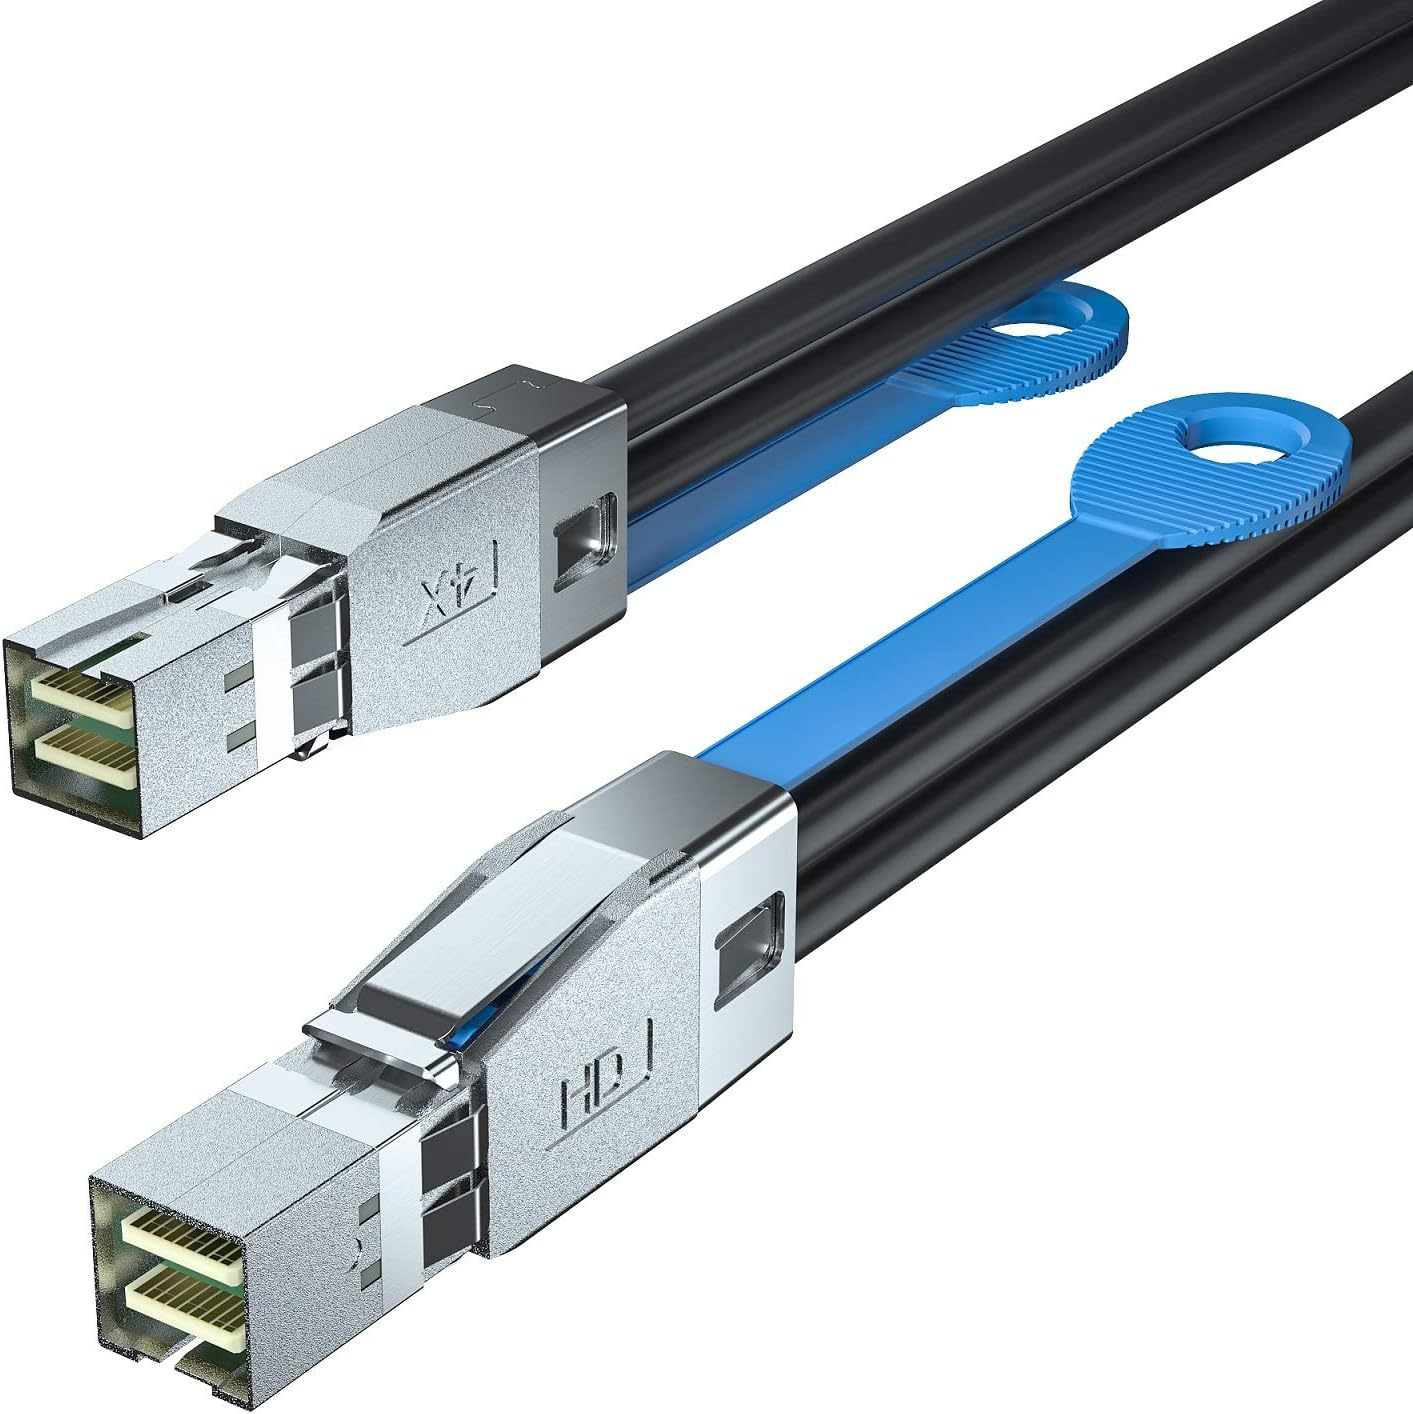 Mini SAS HD Cable Revolutionizes Data Transfer Speeds!